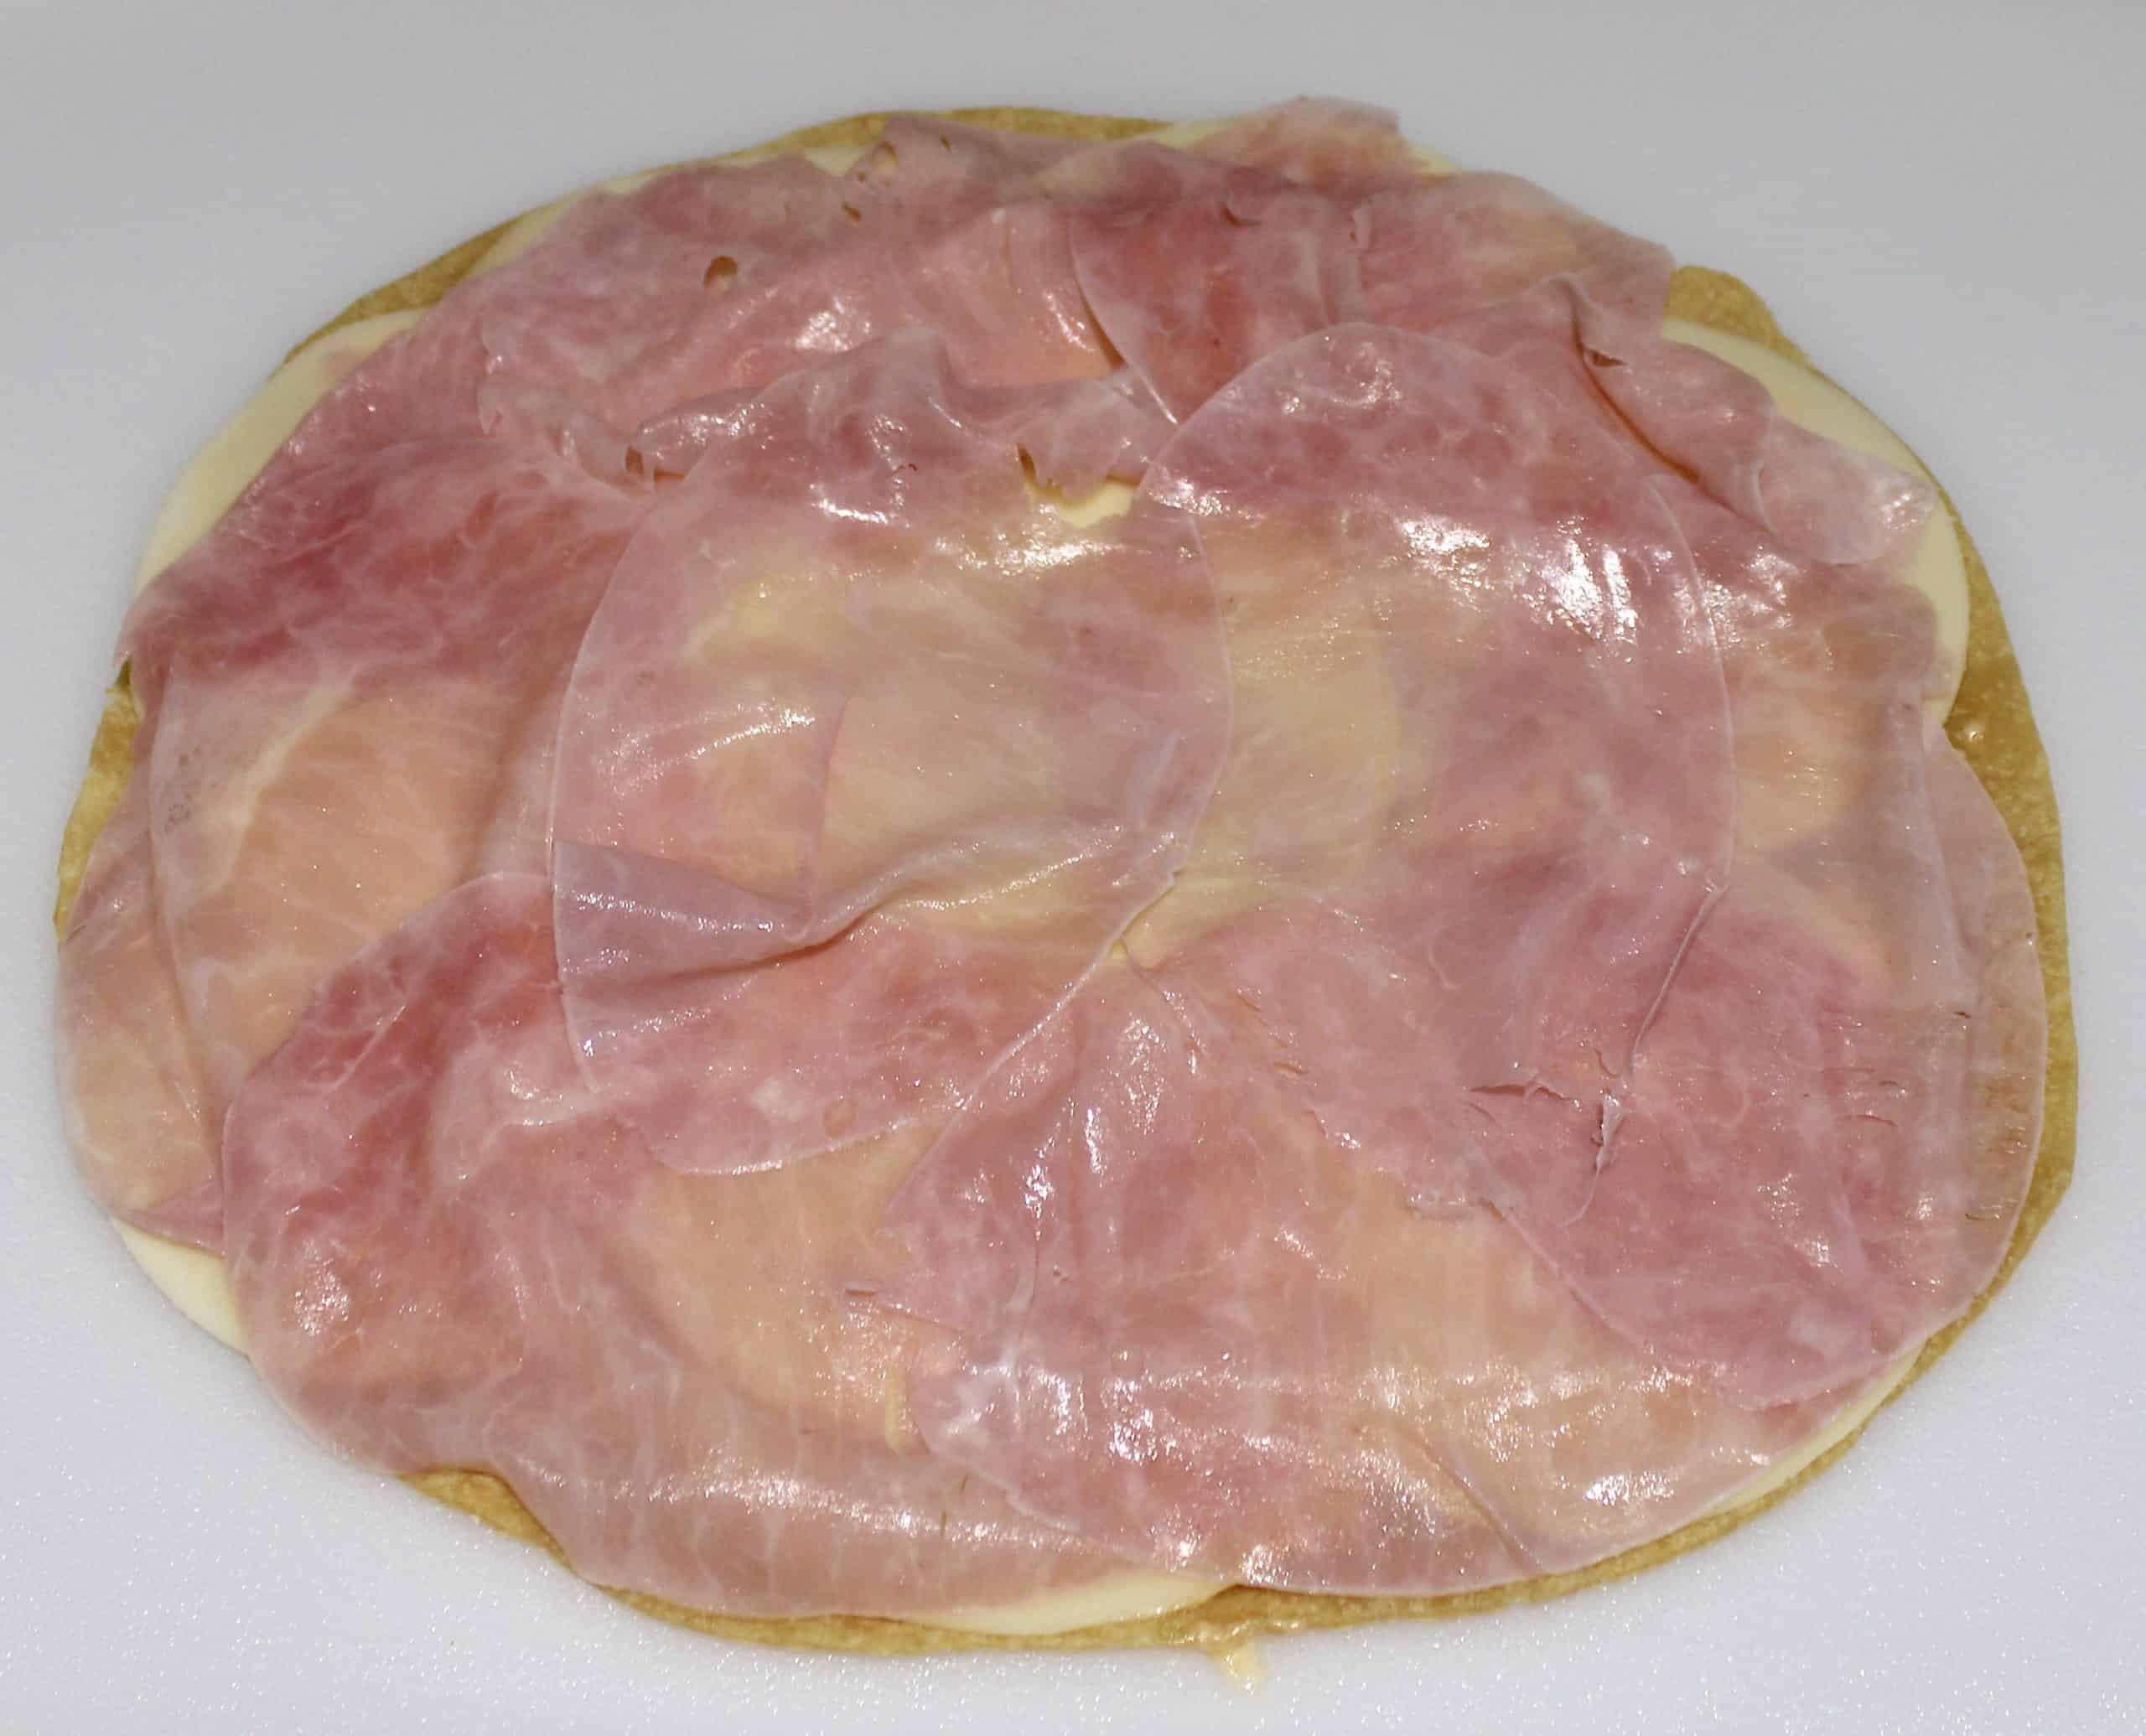 ham over tortilla on white cutting board